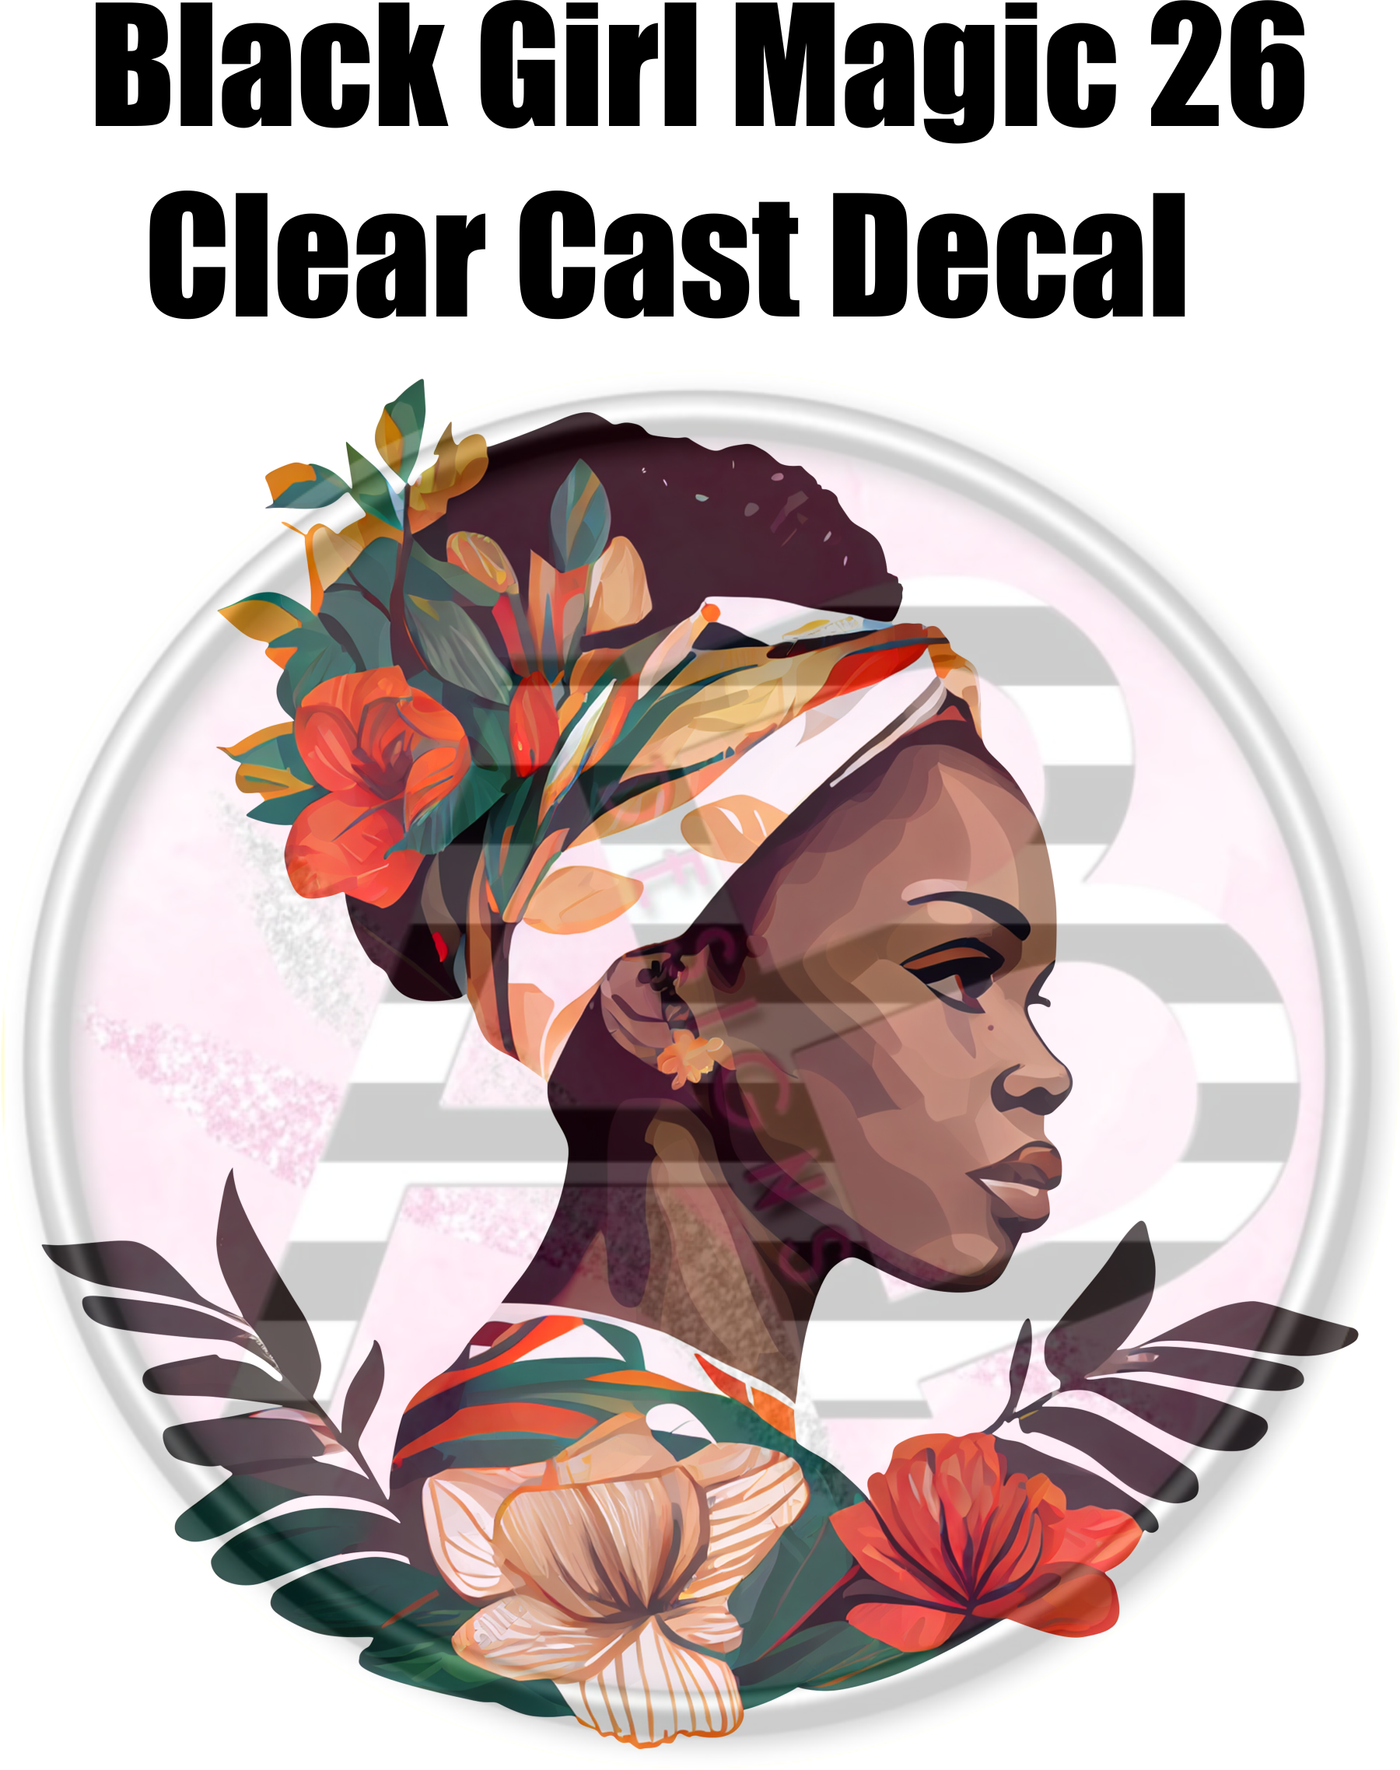 Black Girl Magic 26 - Clear Cast Decal